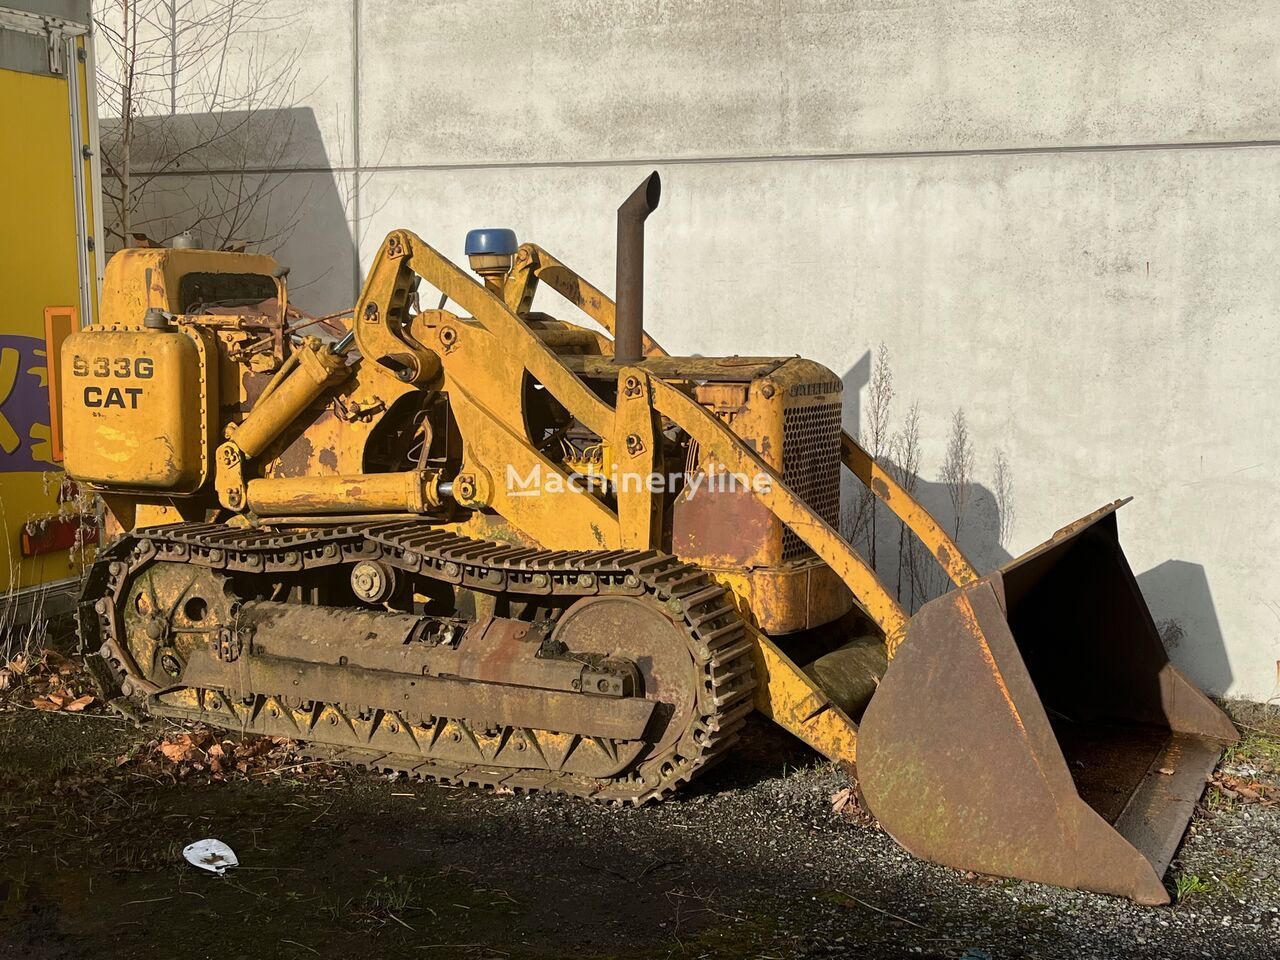 Caterpillar 933 G tracked excavator